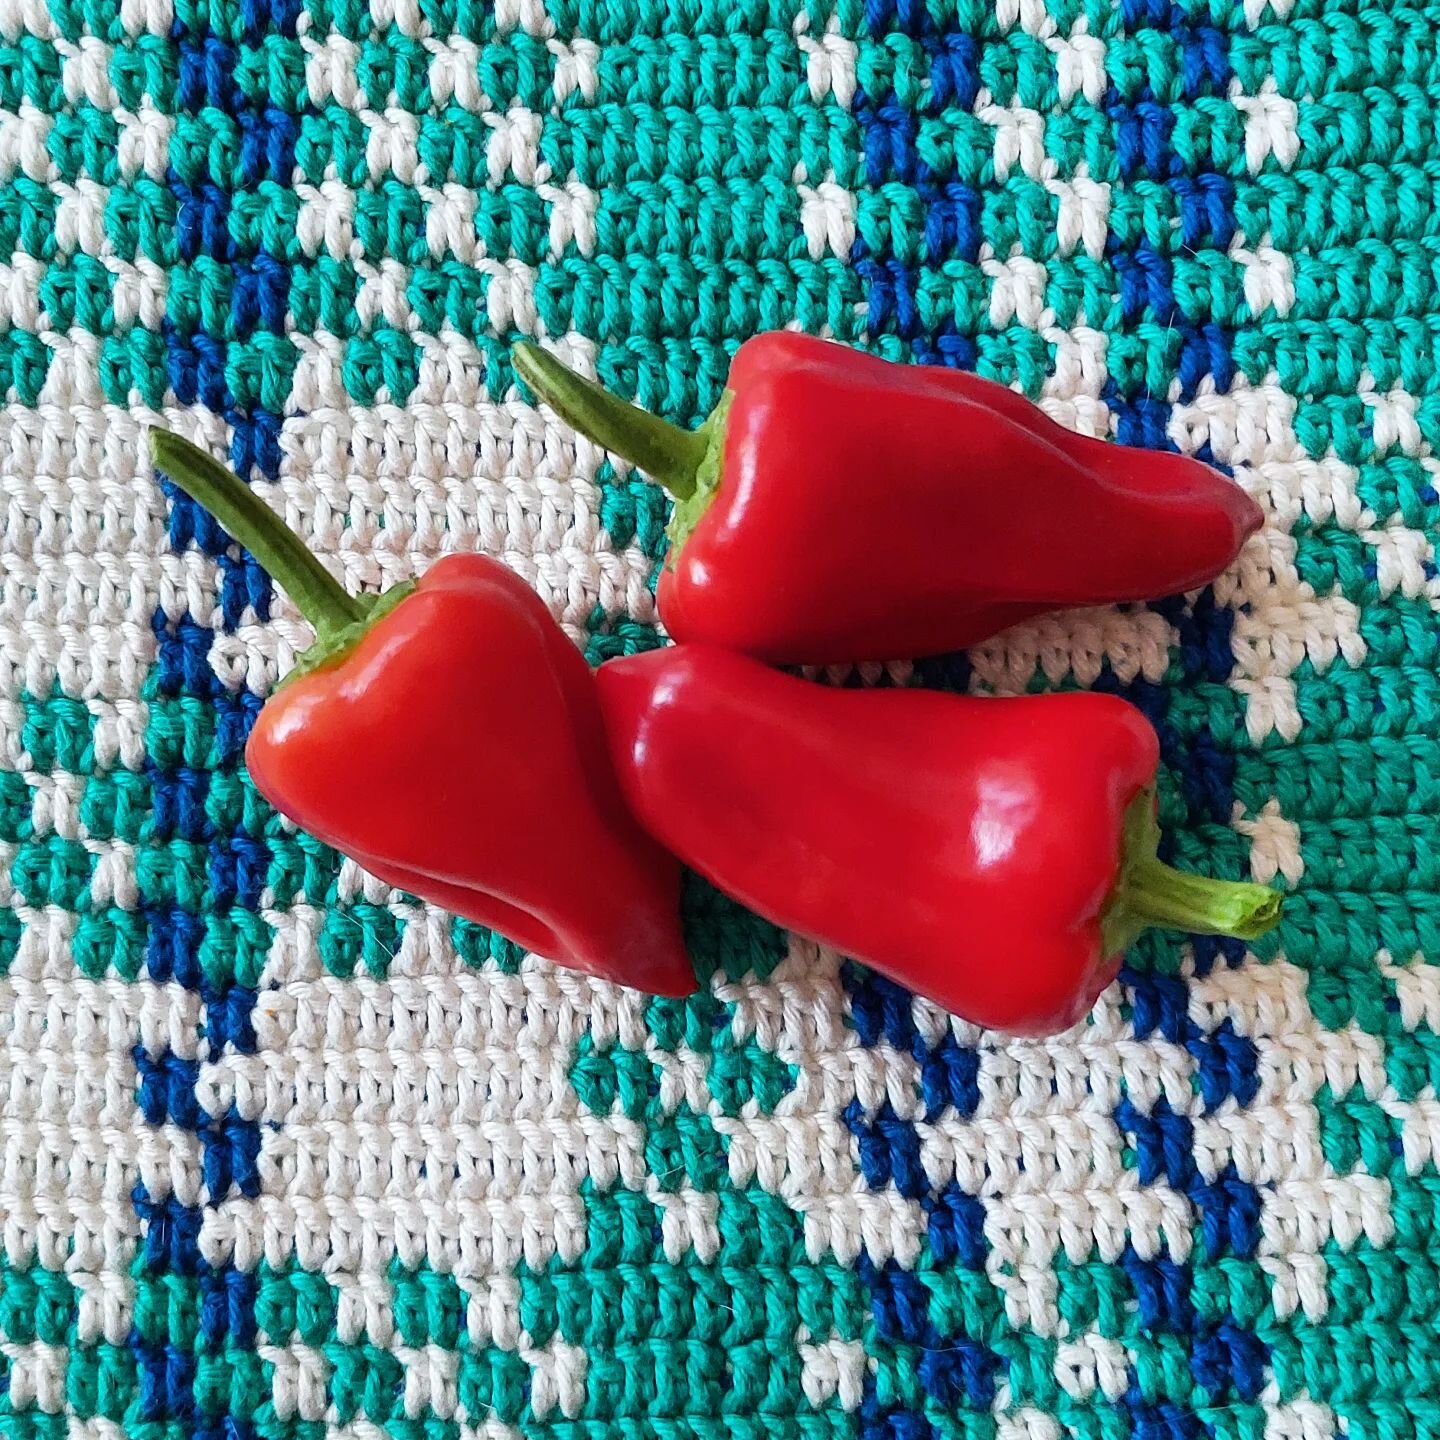 My mini snack peppers! 😊
.
.
#hookoflife #crochet❤ #crochetlovers #crochetingaddict #handmade #feitoamao #crochetastherapy 
#craftoftheday #crocheteirasviciadas #crocheteiras #crochetofinstagram #crocheportugal #crochetersoftheworld
#agulhasdeportug